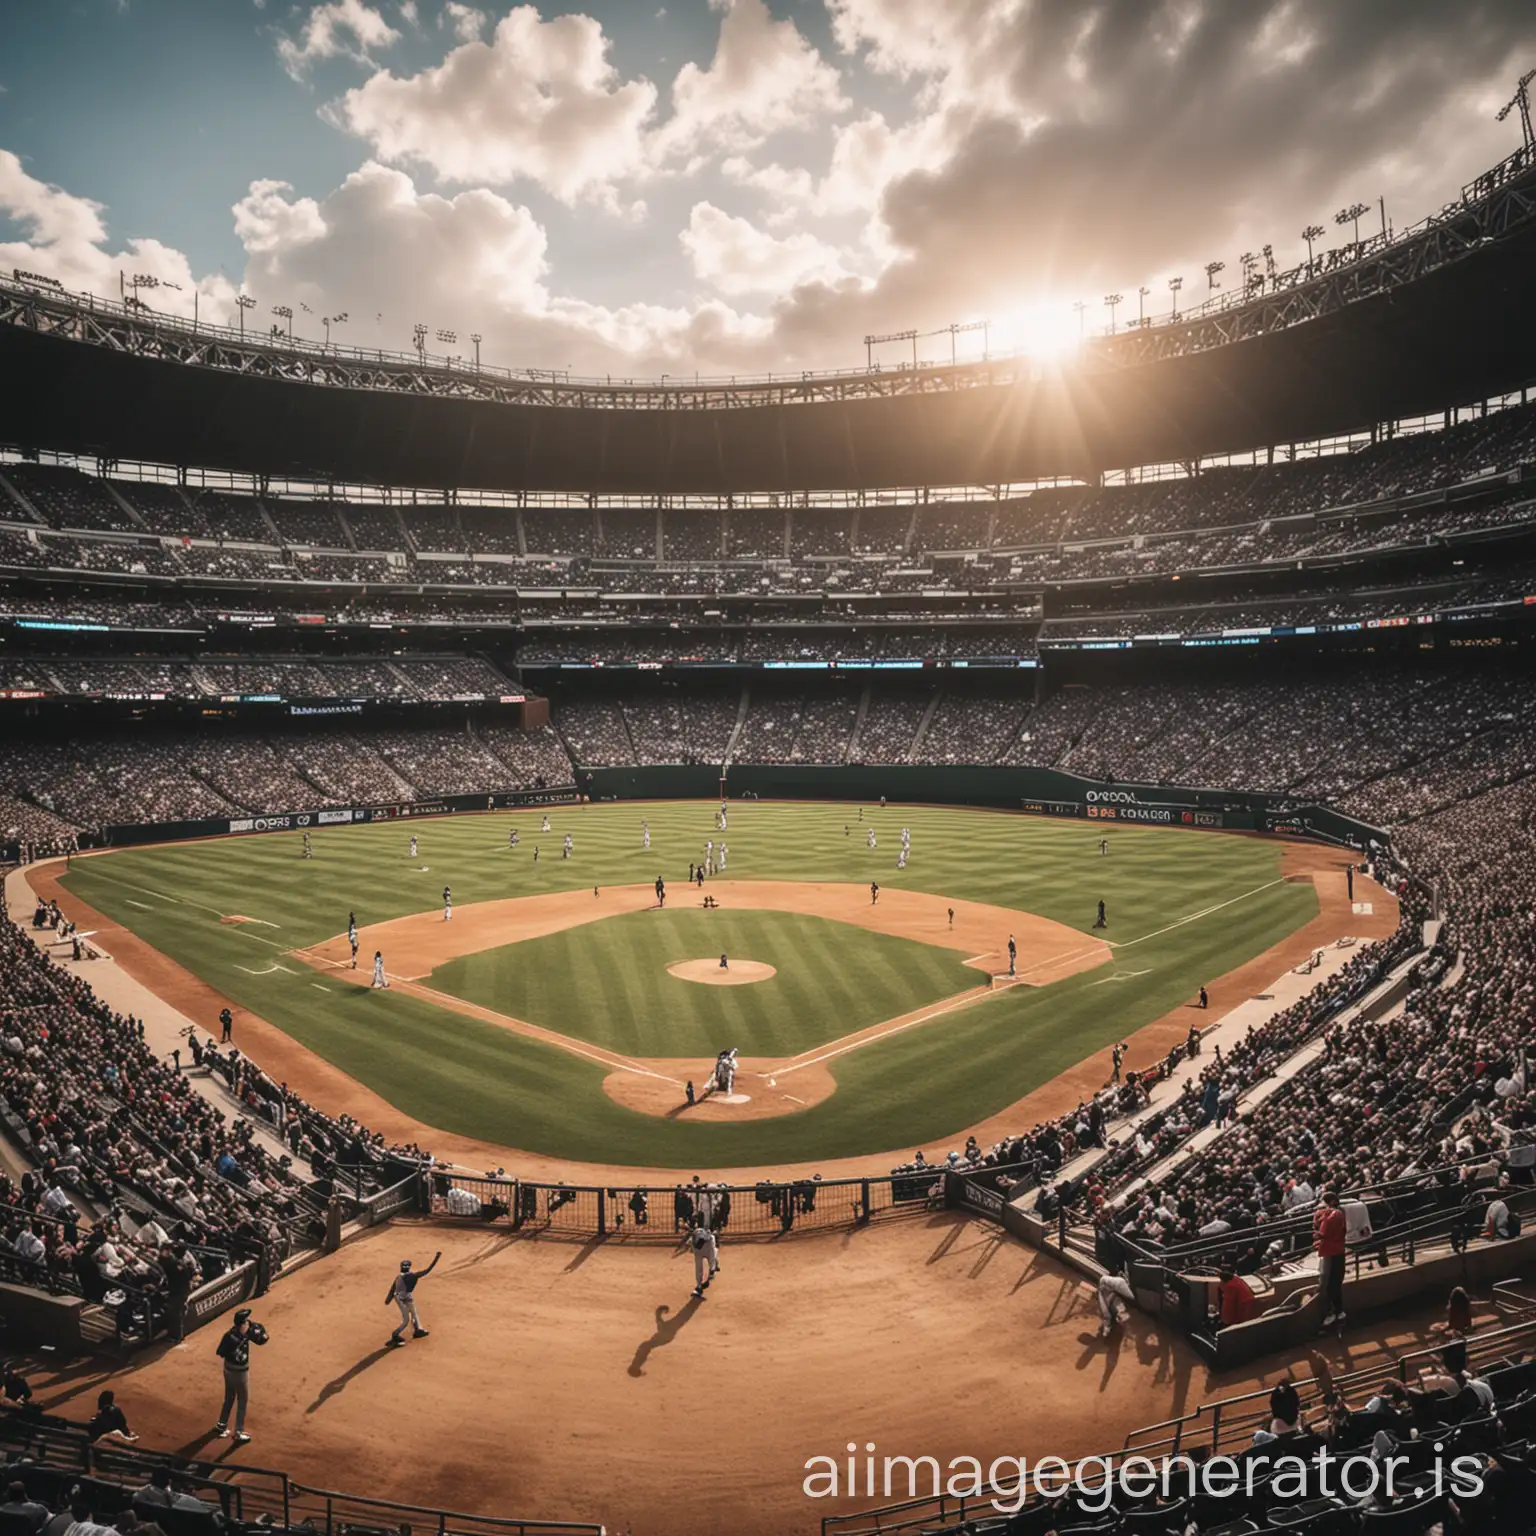 Dynamic-Baseball-Players-Hit-Home-Runs-in-Vibrant-Stadium-Scene